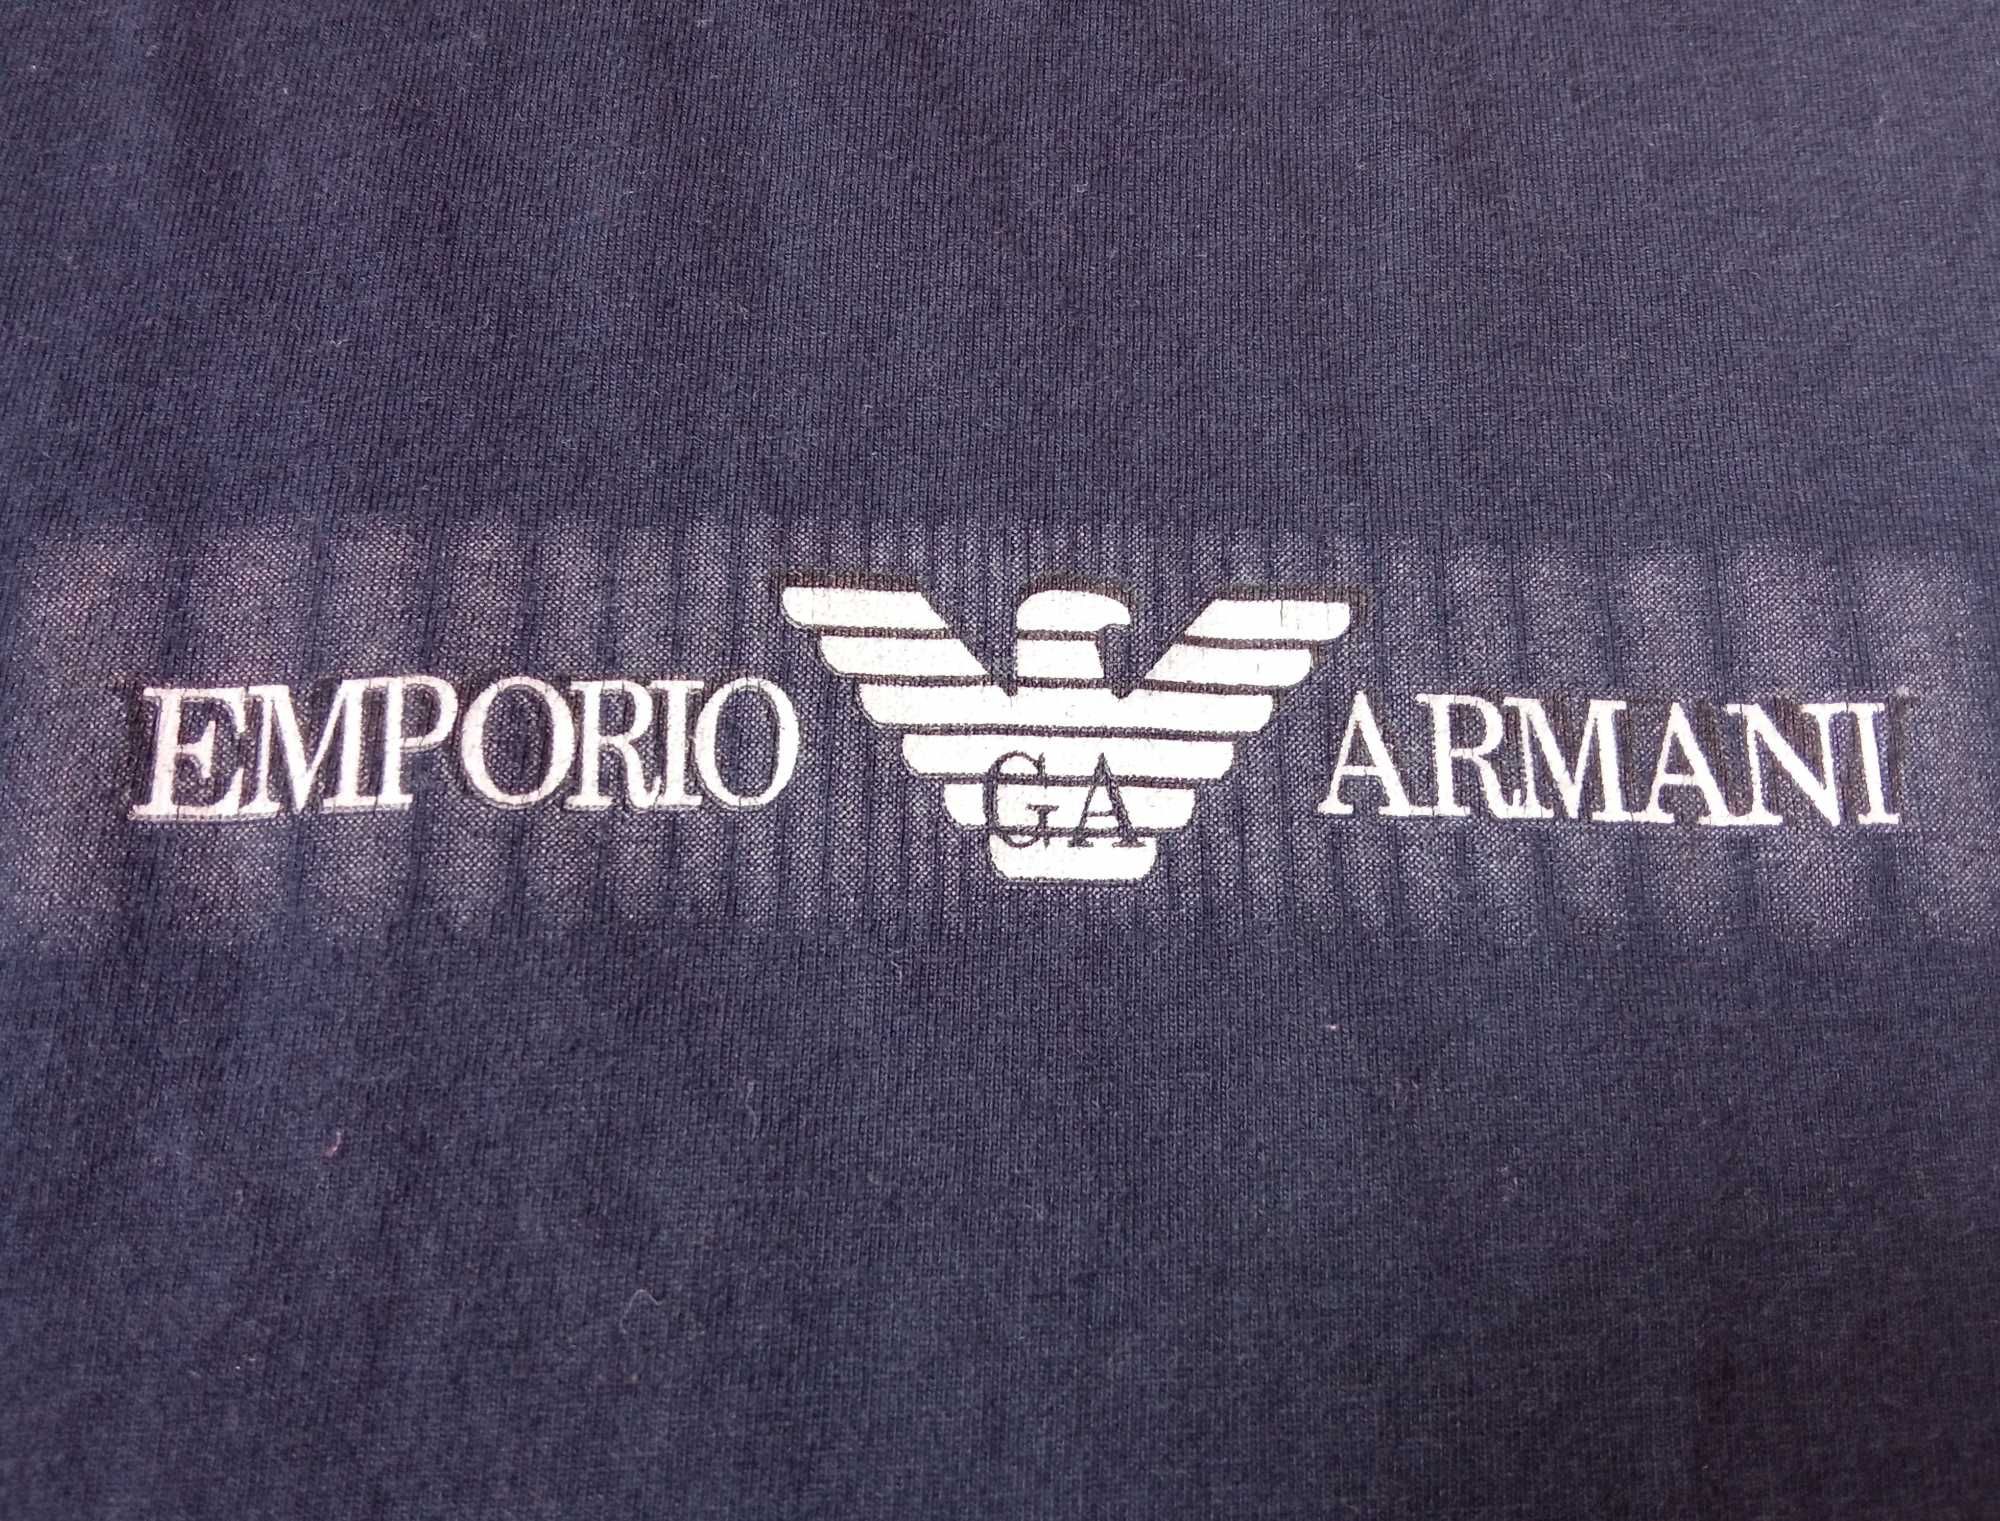 Футболка Emporio Armani